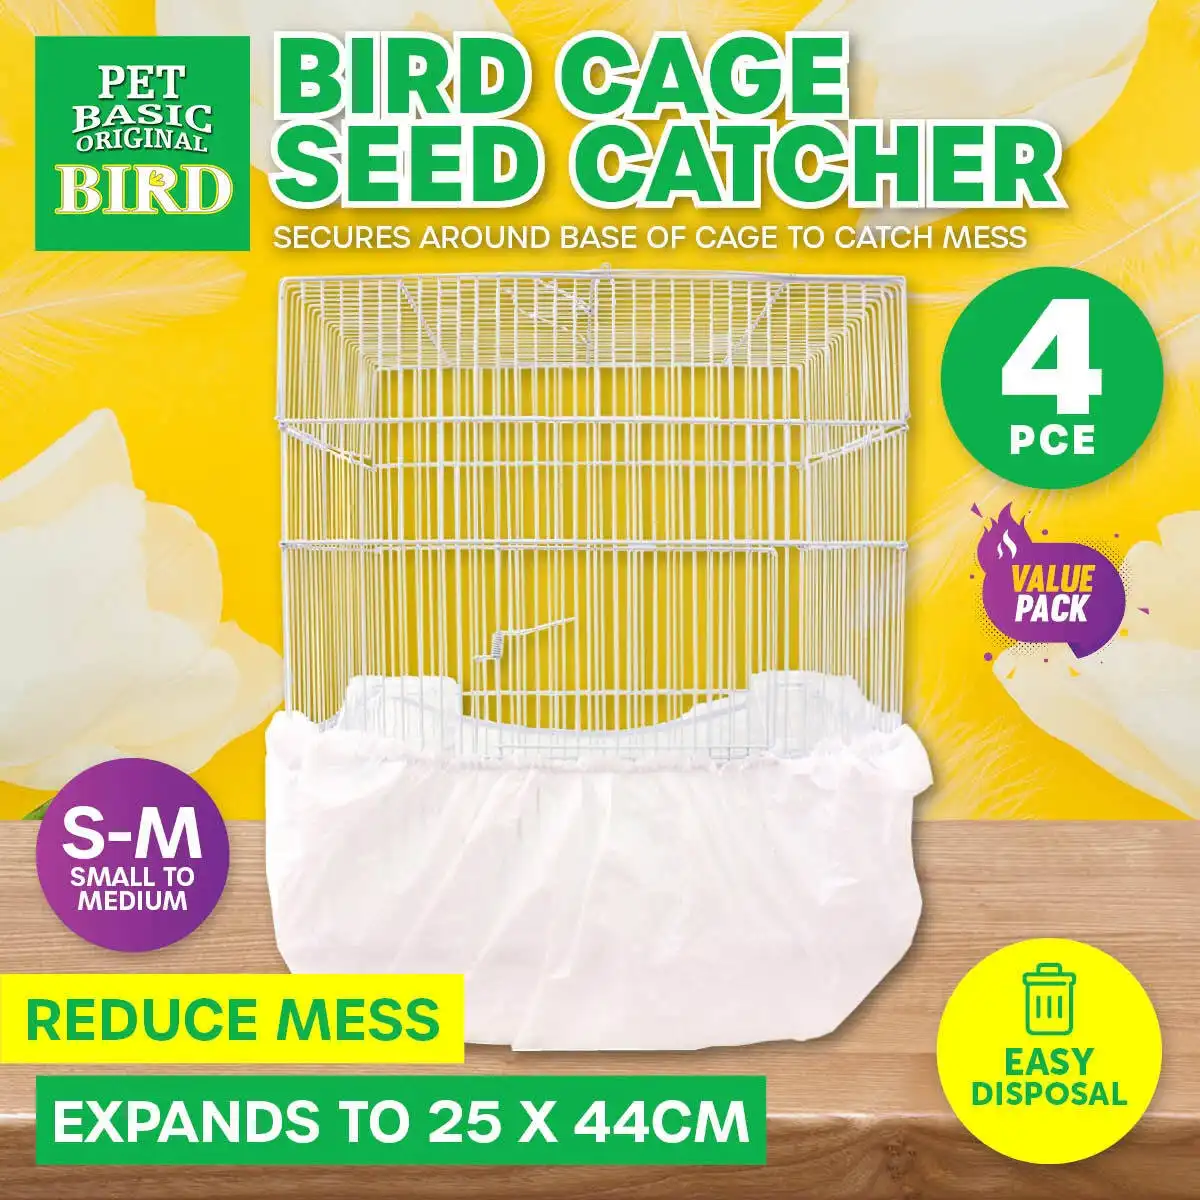 Pet Basic®4PK Bird Cage Seed Catcher Reduce Mess Reusable Disposable 25 x 44cm